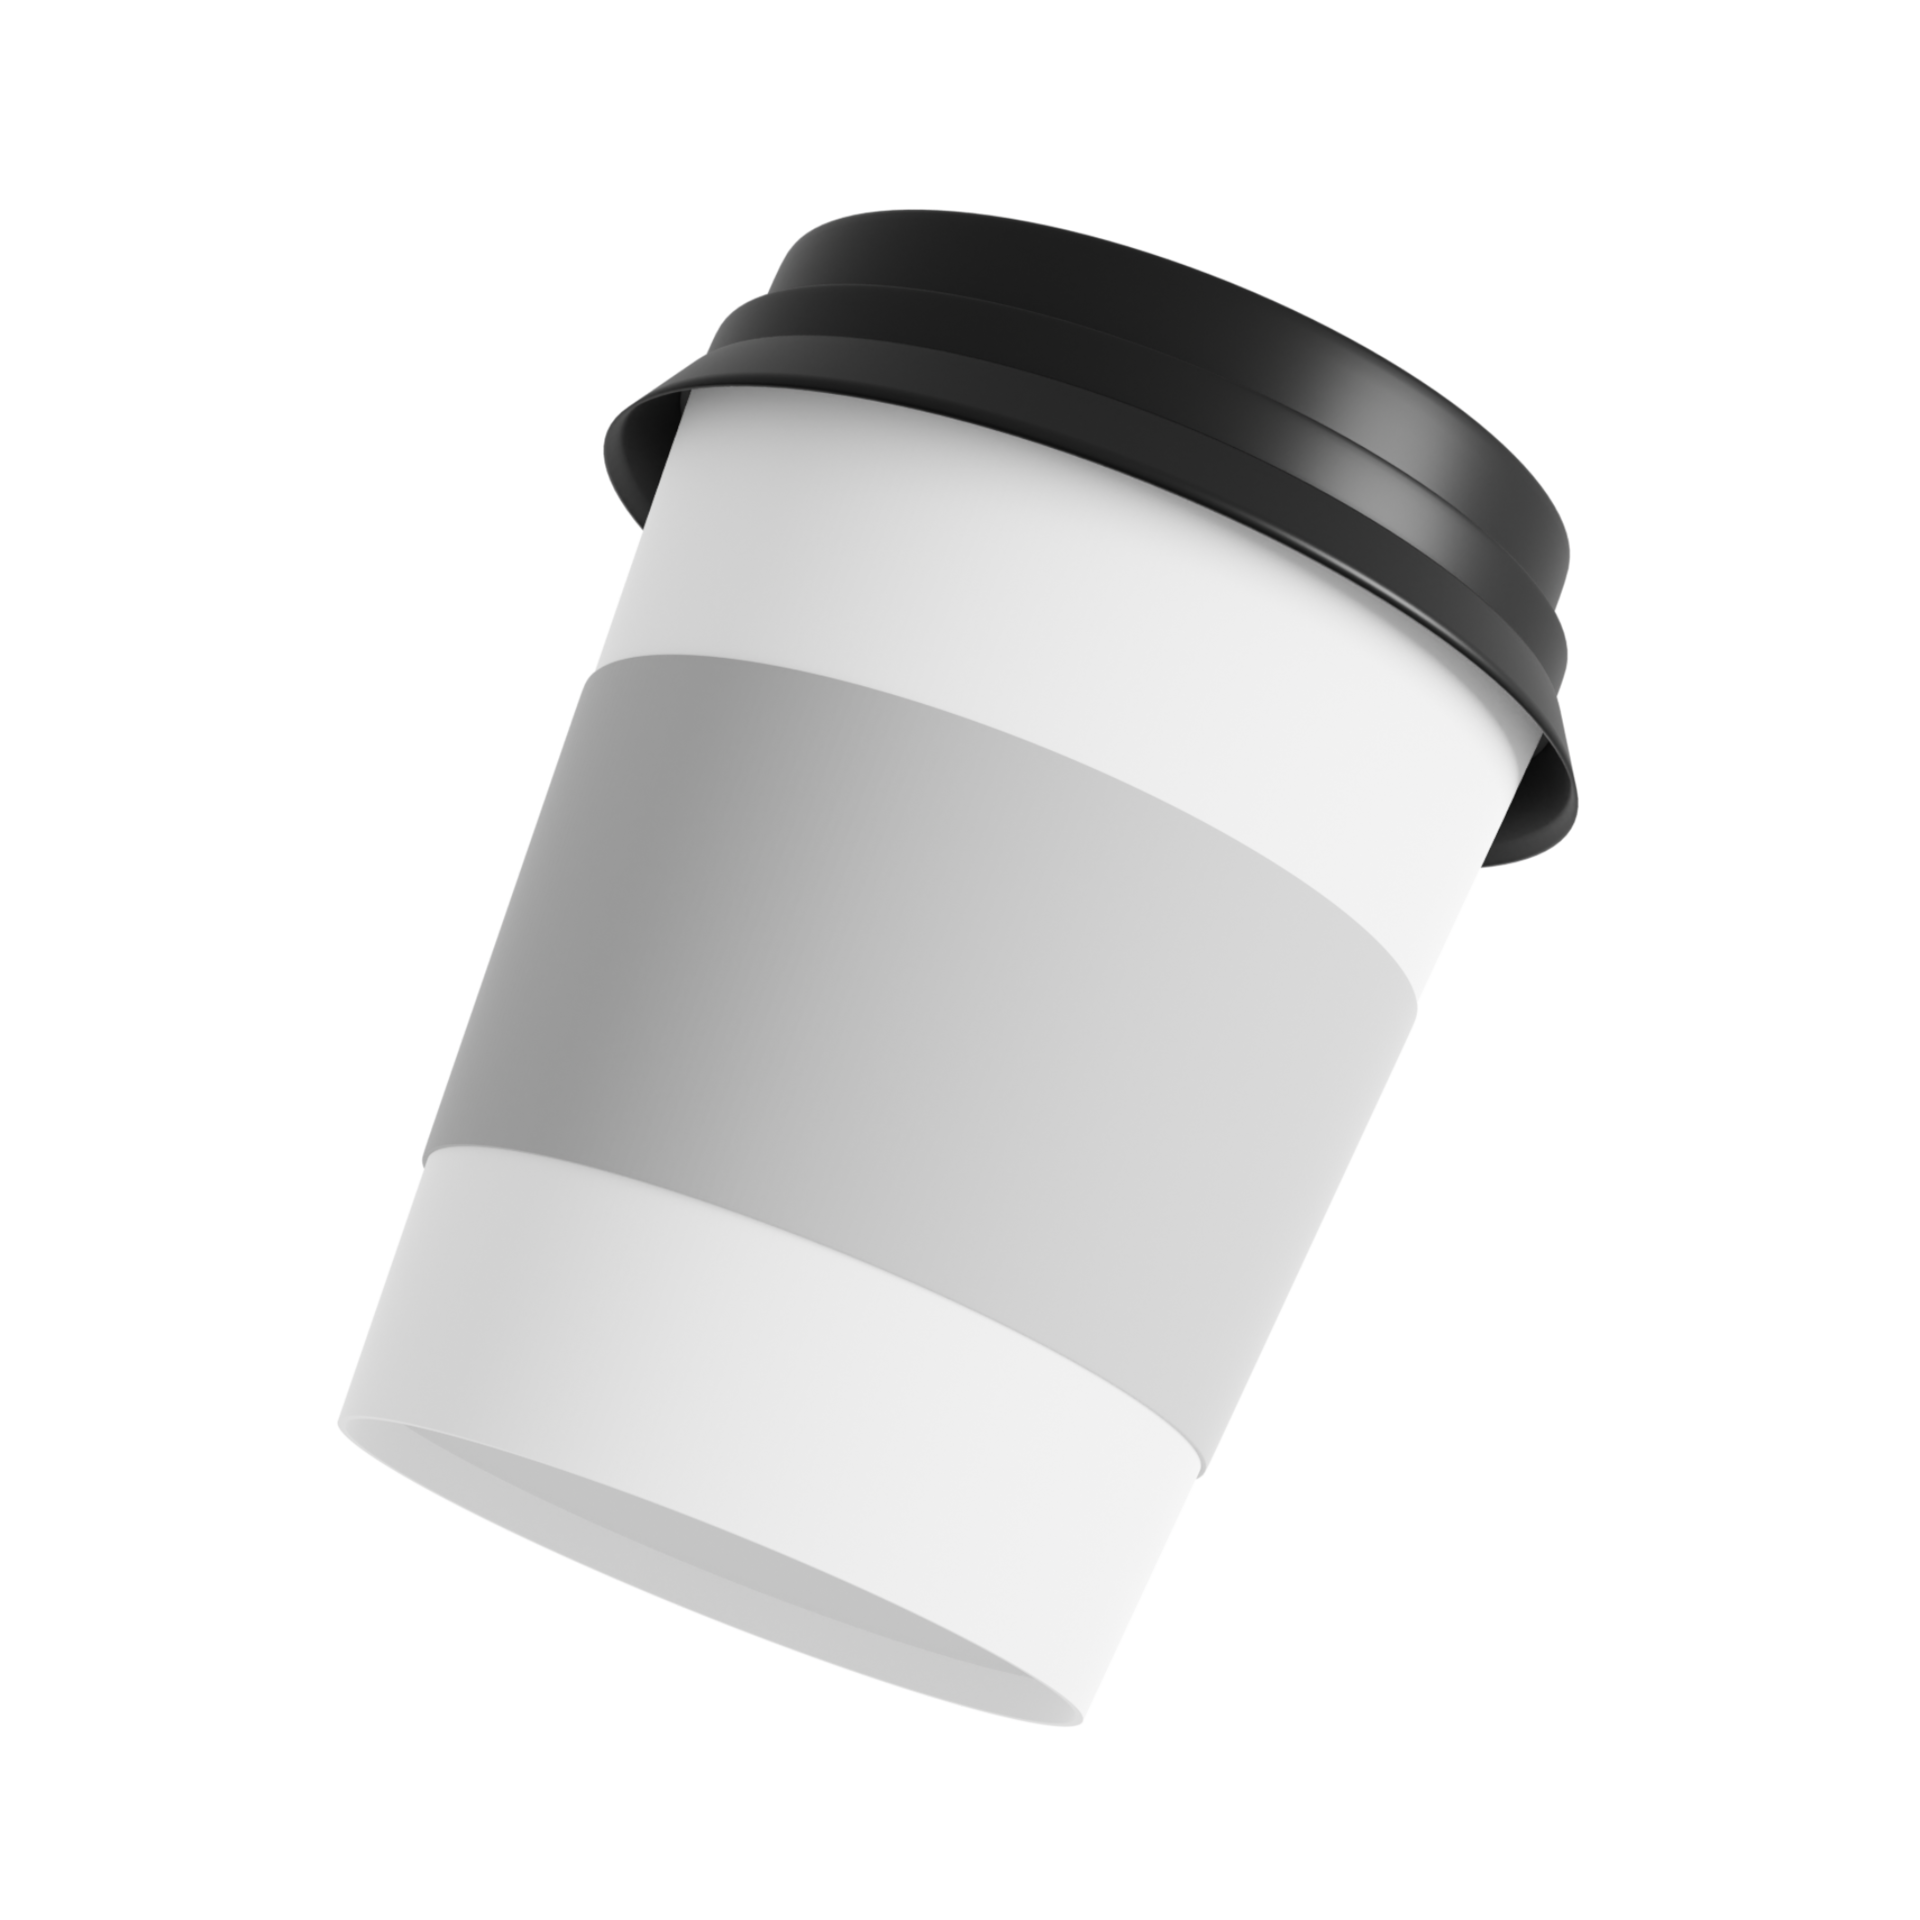 Cool coffeecup logos - Logoblink.com